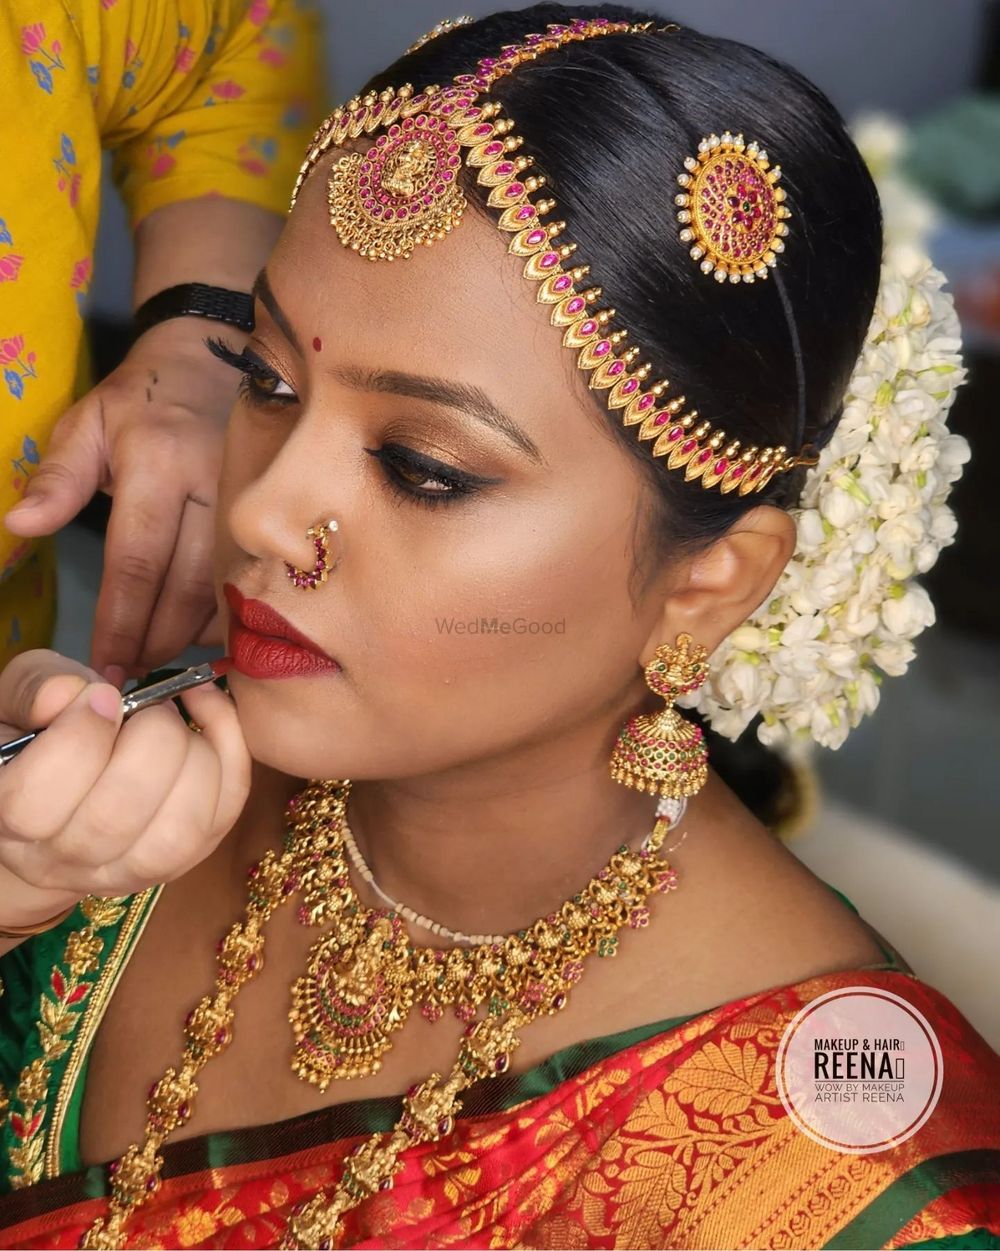 Photo By Wow - Makeup Artist Reena - Bridal Makeup